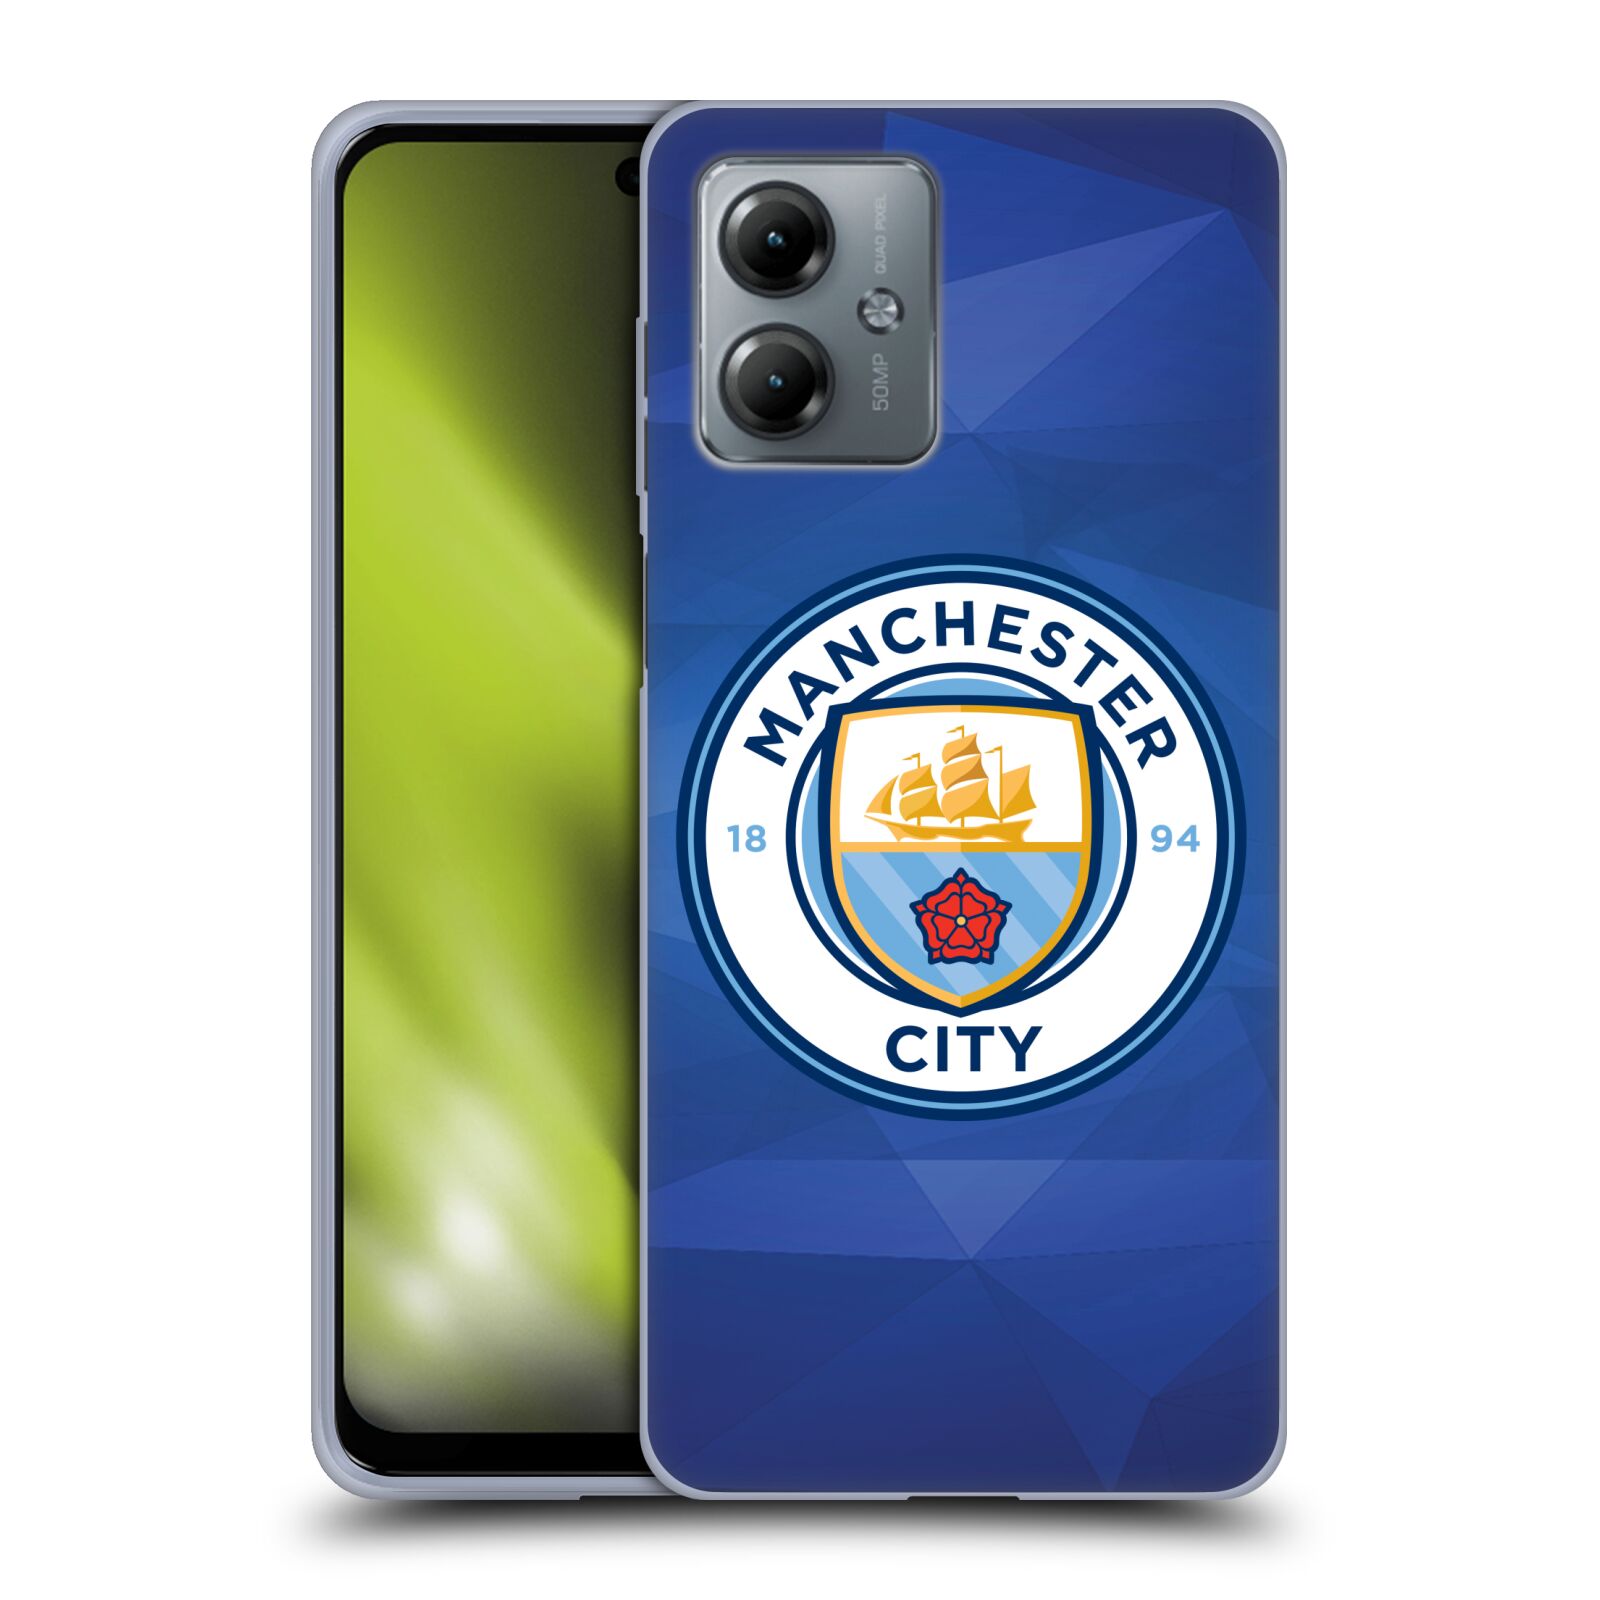 Silikonové pouzdro na mobil Motorola Moto G14 - Head Case - Manchester City FC - Modré nové logo (Silikonový kryt, obal, pouzdro na mobilní telefon Motorola Moto G14 s motivem Manchester City FC - Modré nové logo)